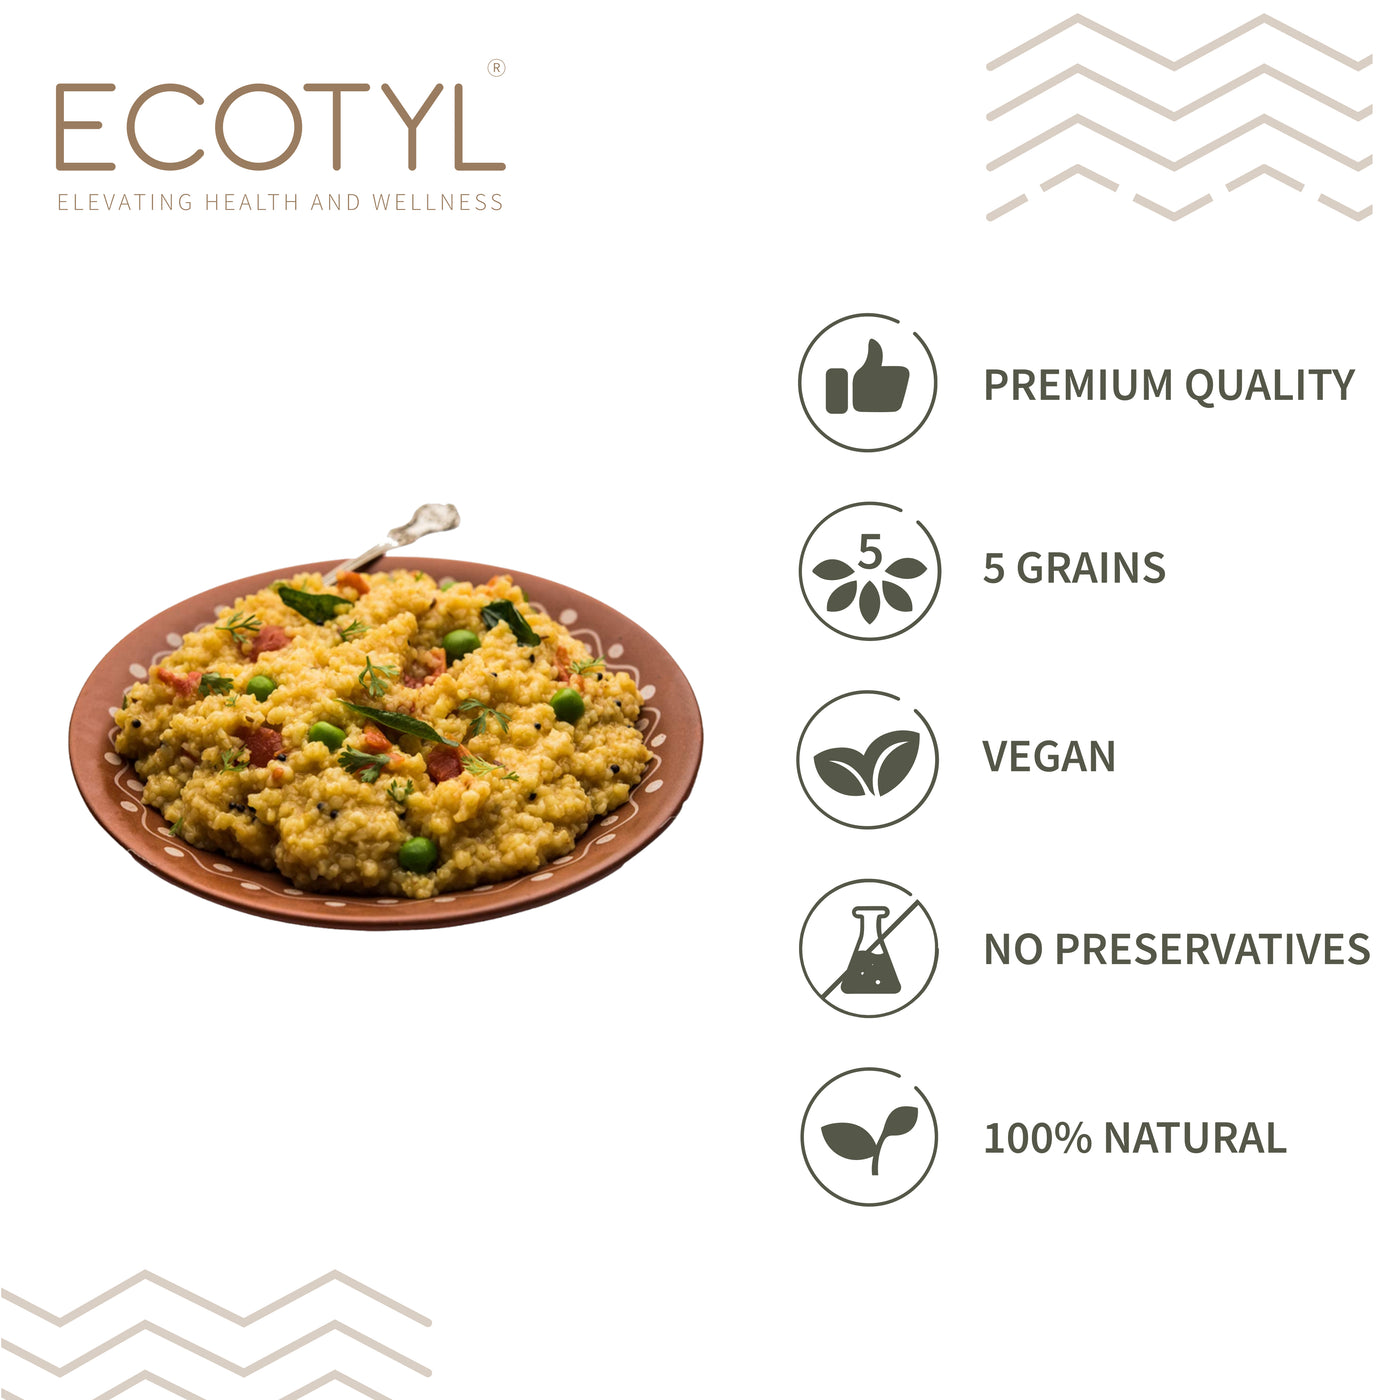 Ecotyl Multigrain Daliya | 5 Super Grains | Porridge | Easy to Make | 500g